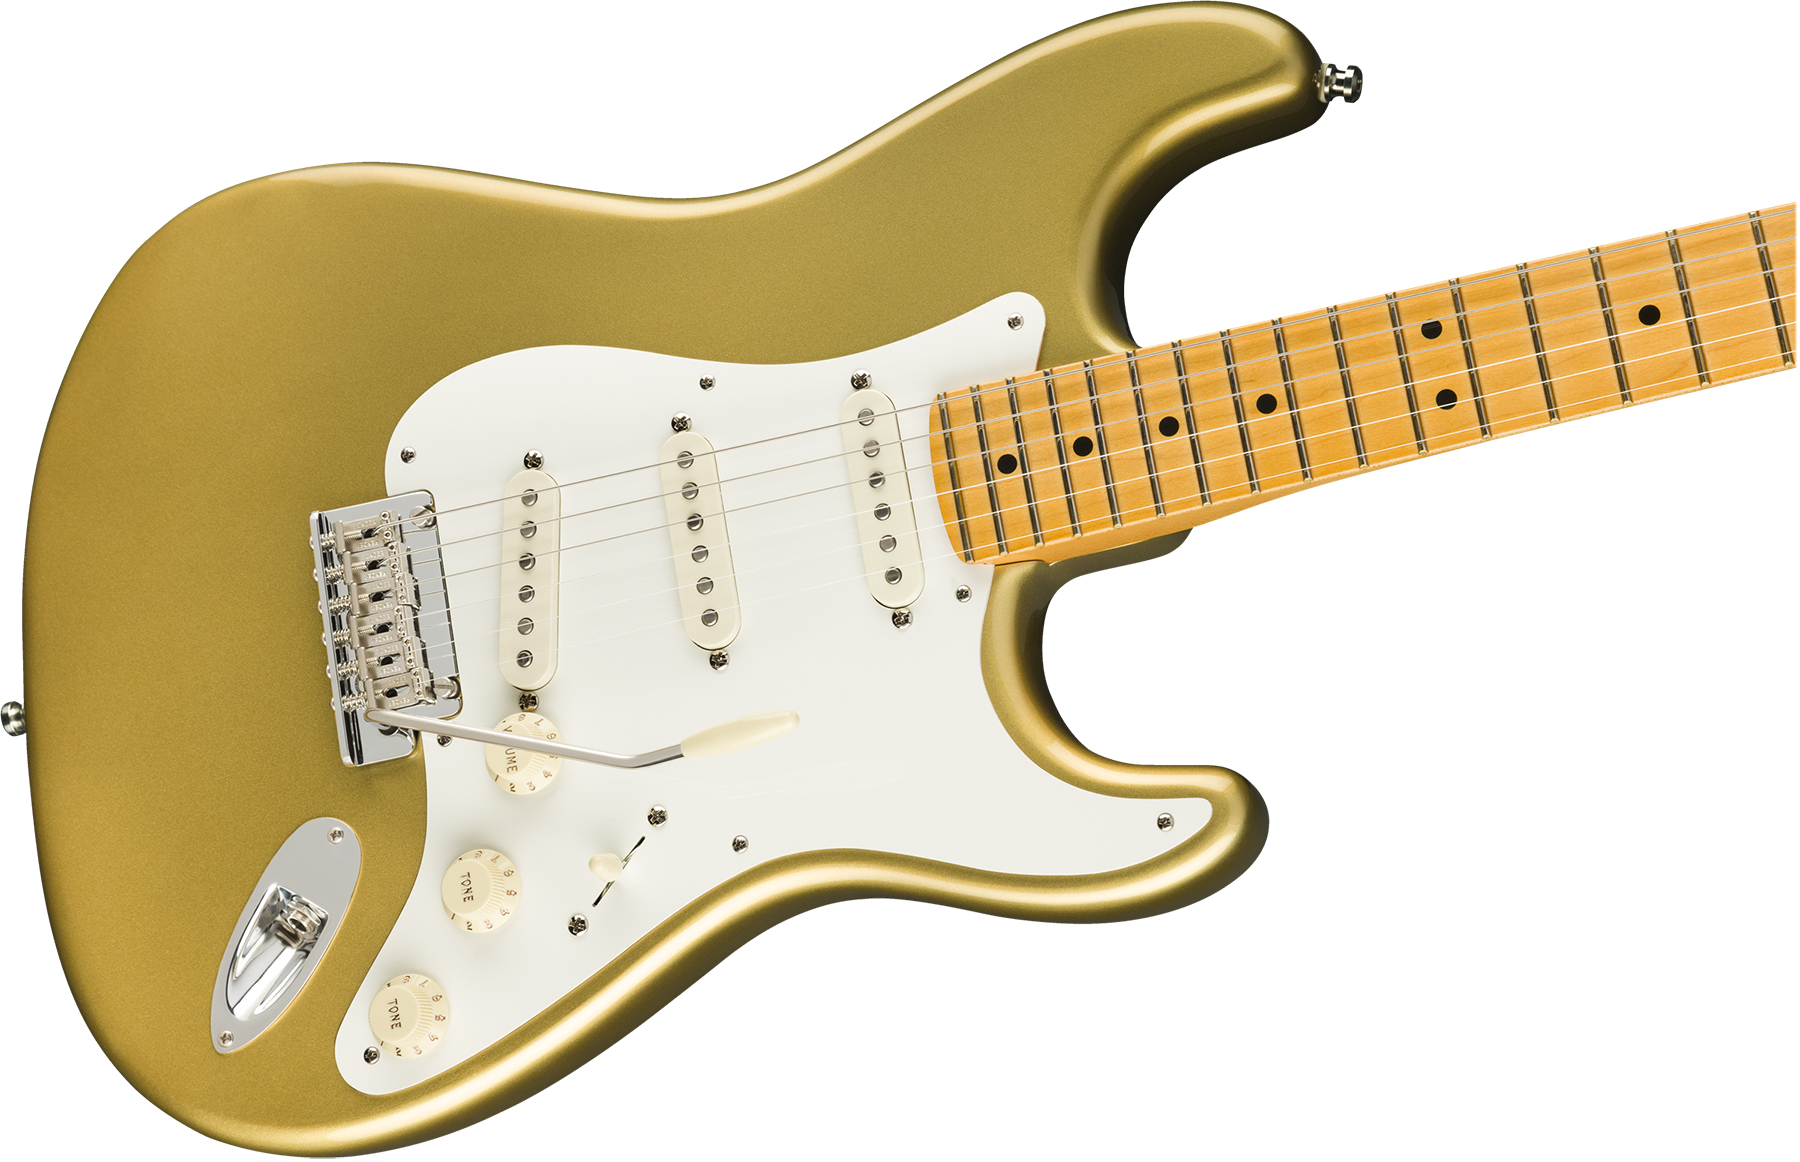 Fender Strat Lincoln Brewster Usa Signature Mn - Aztec Gold - Guitare Électrique Forme Str - Variation 2